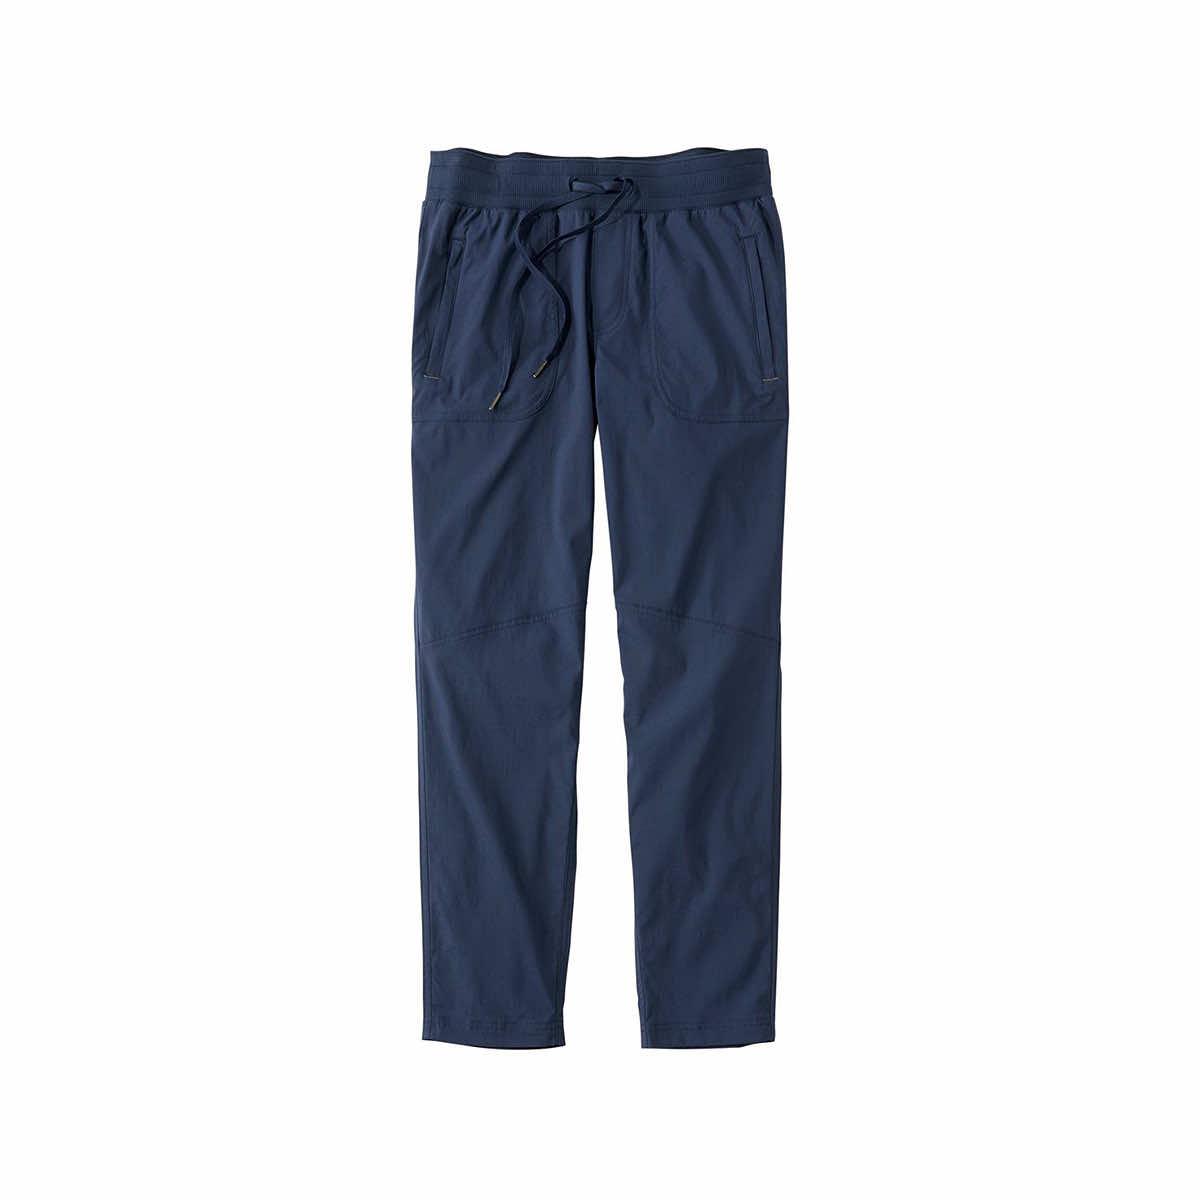 Harla Pants  Thread supply, Jogger pants, How to wear